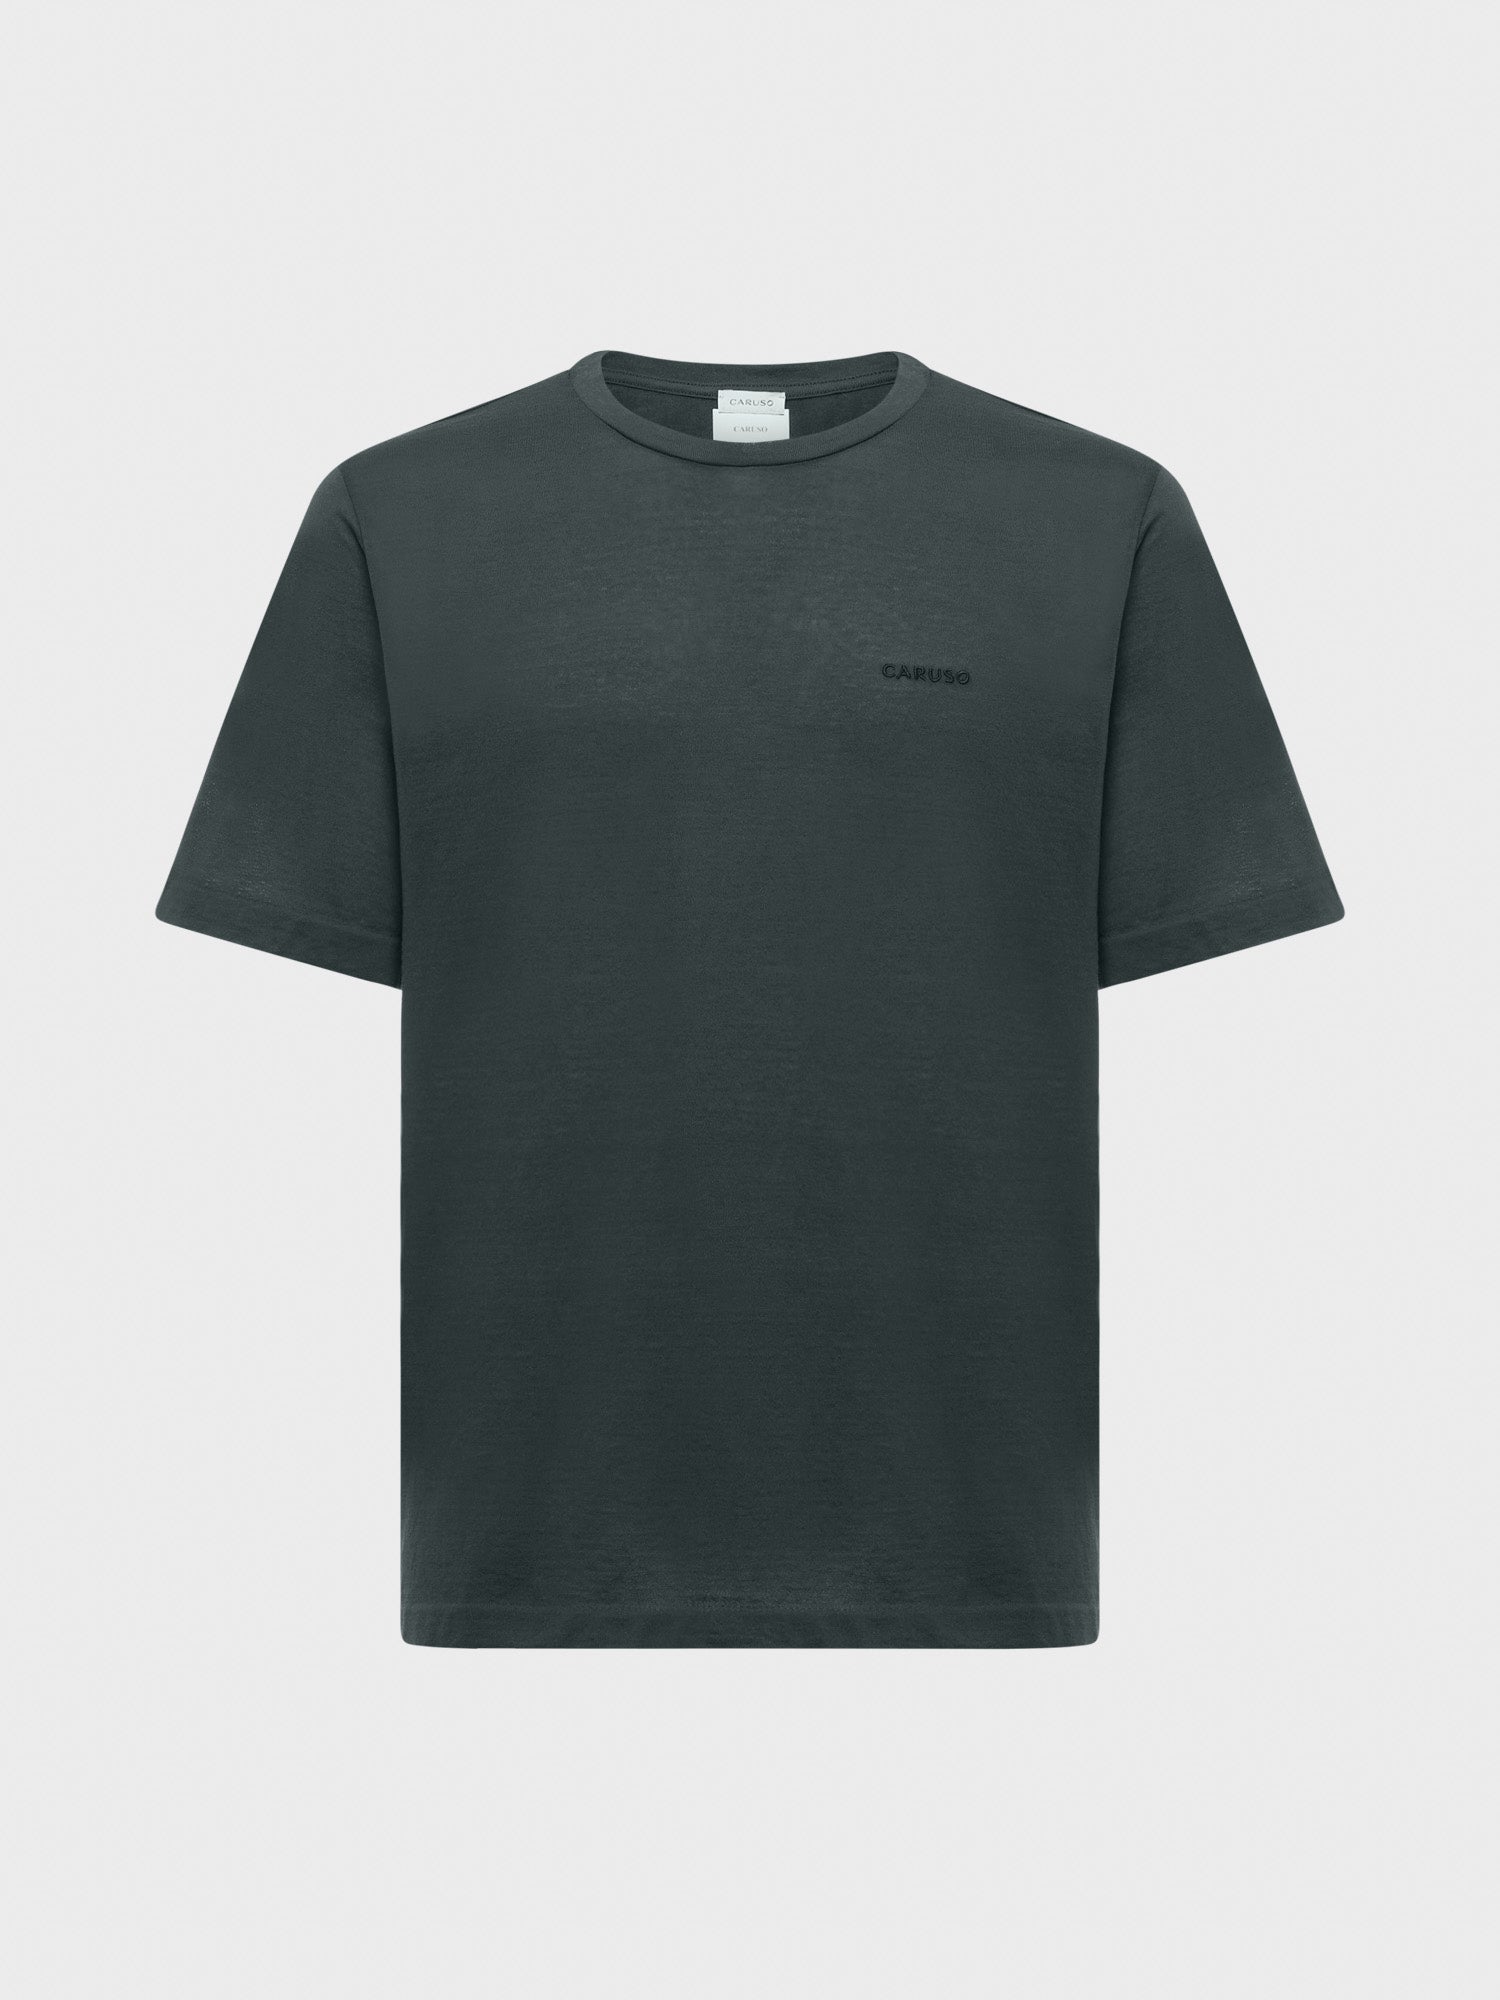 Caruso - T-Shirt girocollo in jersey carbone